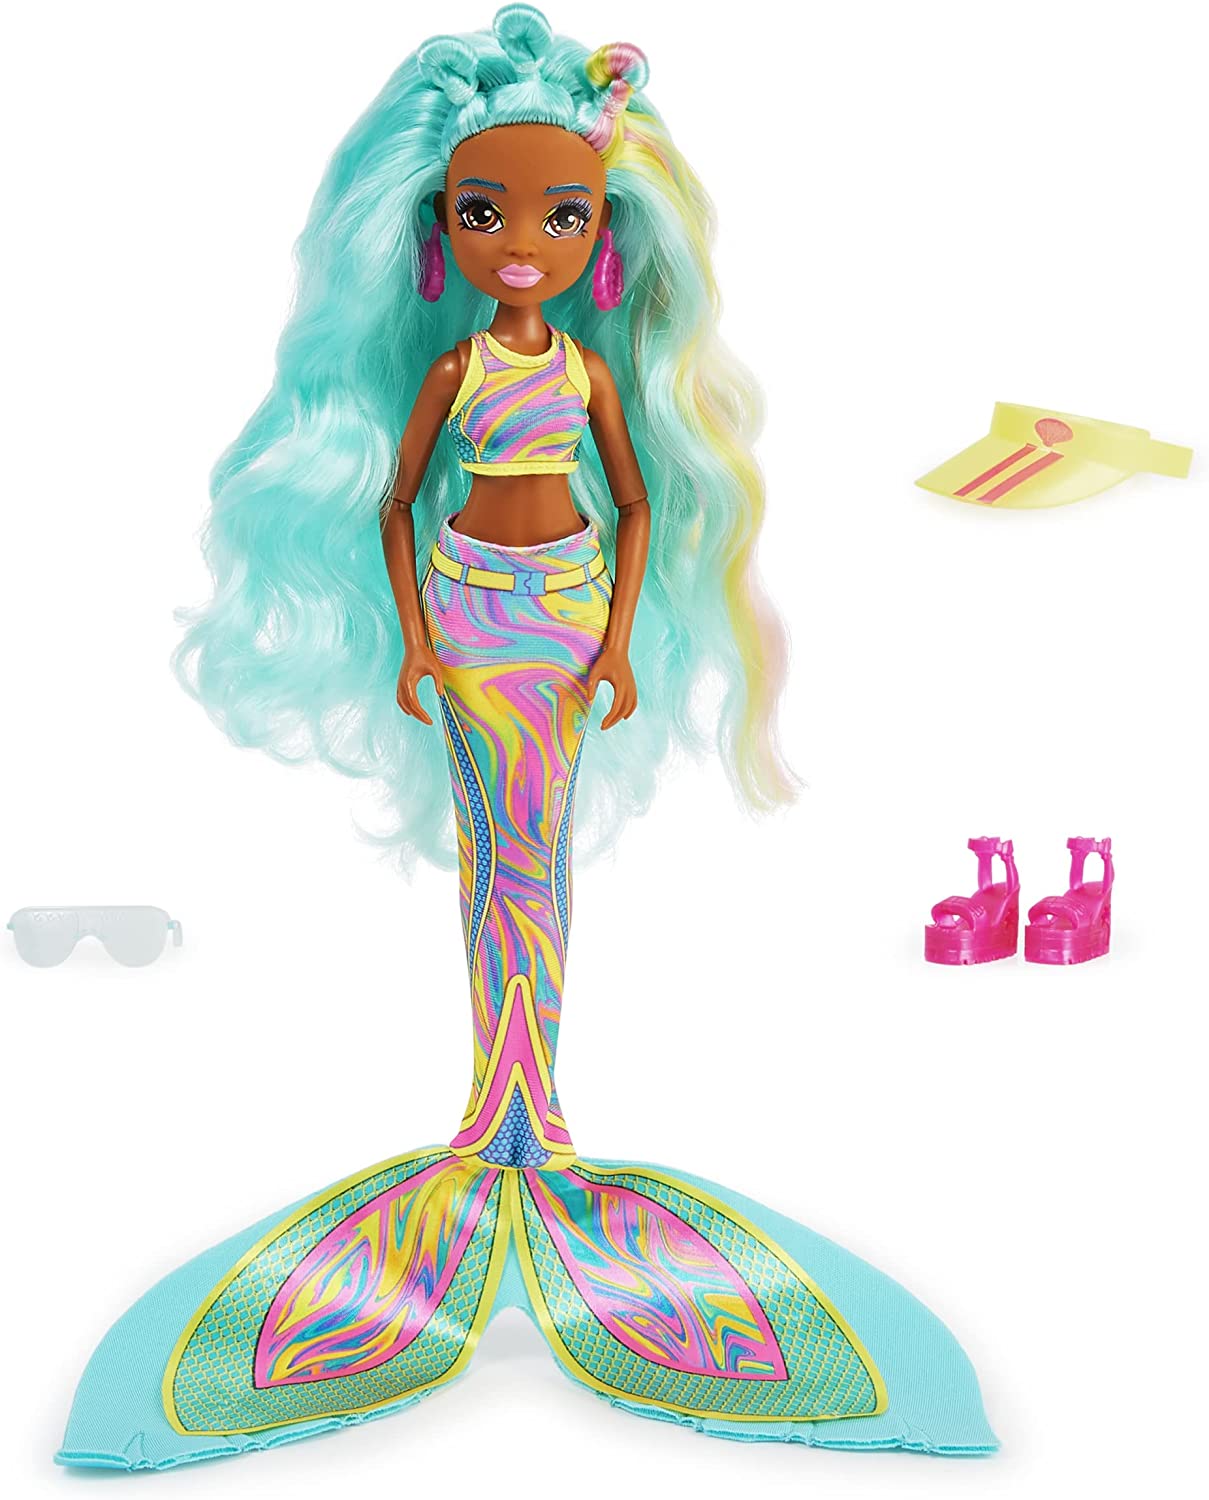 Mermaid High Spring Break dolls 2022 - YouLoveIt.com